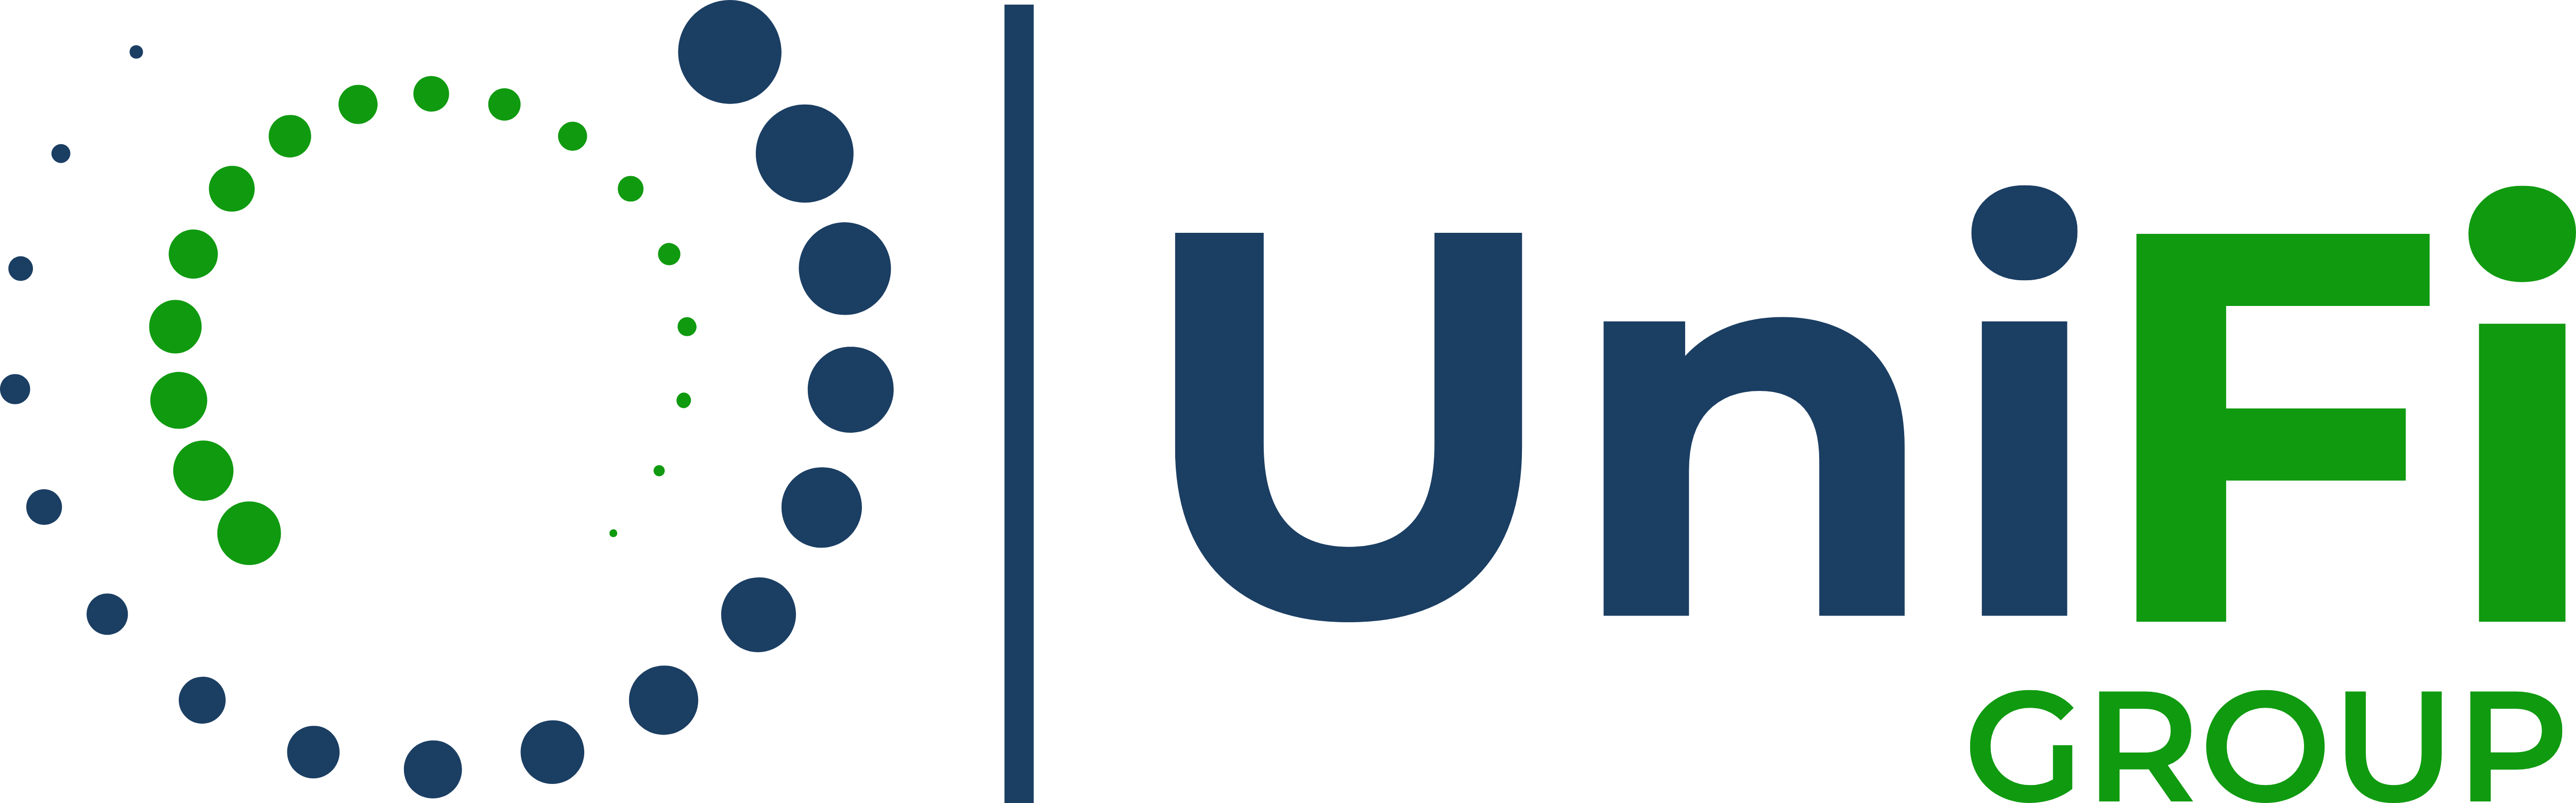 Unifi Group